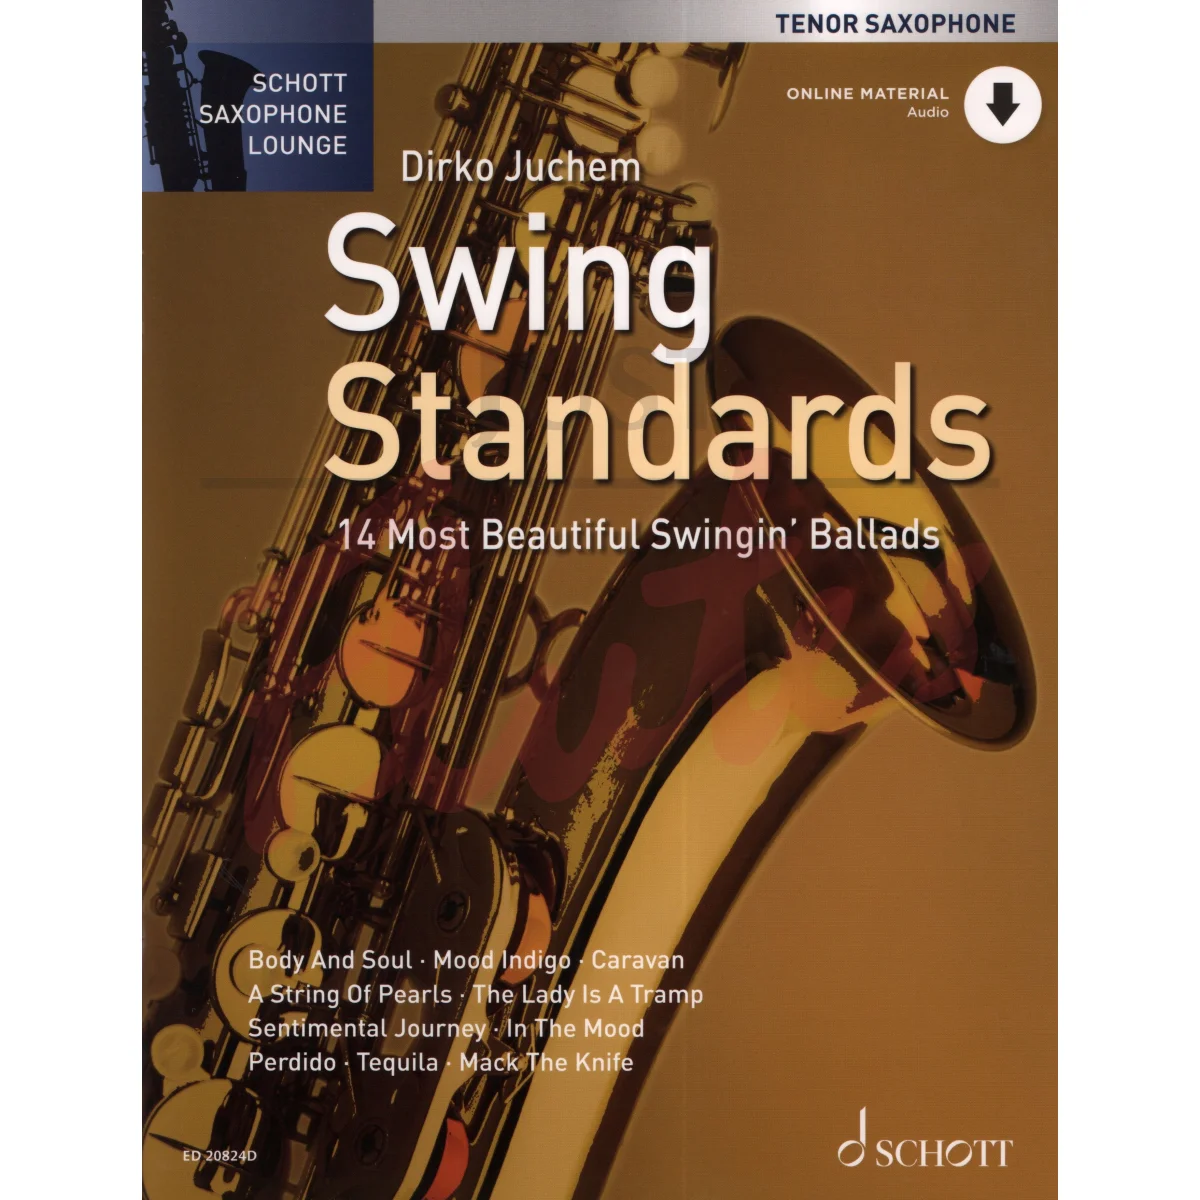 Schott Saxophone Lounge: Swing Standards for Tenor Saxophone and Piano